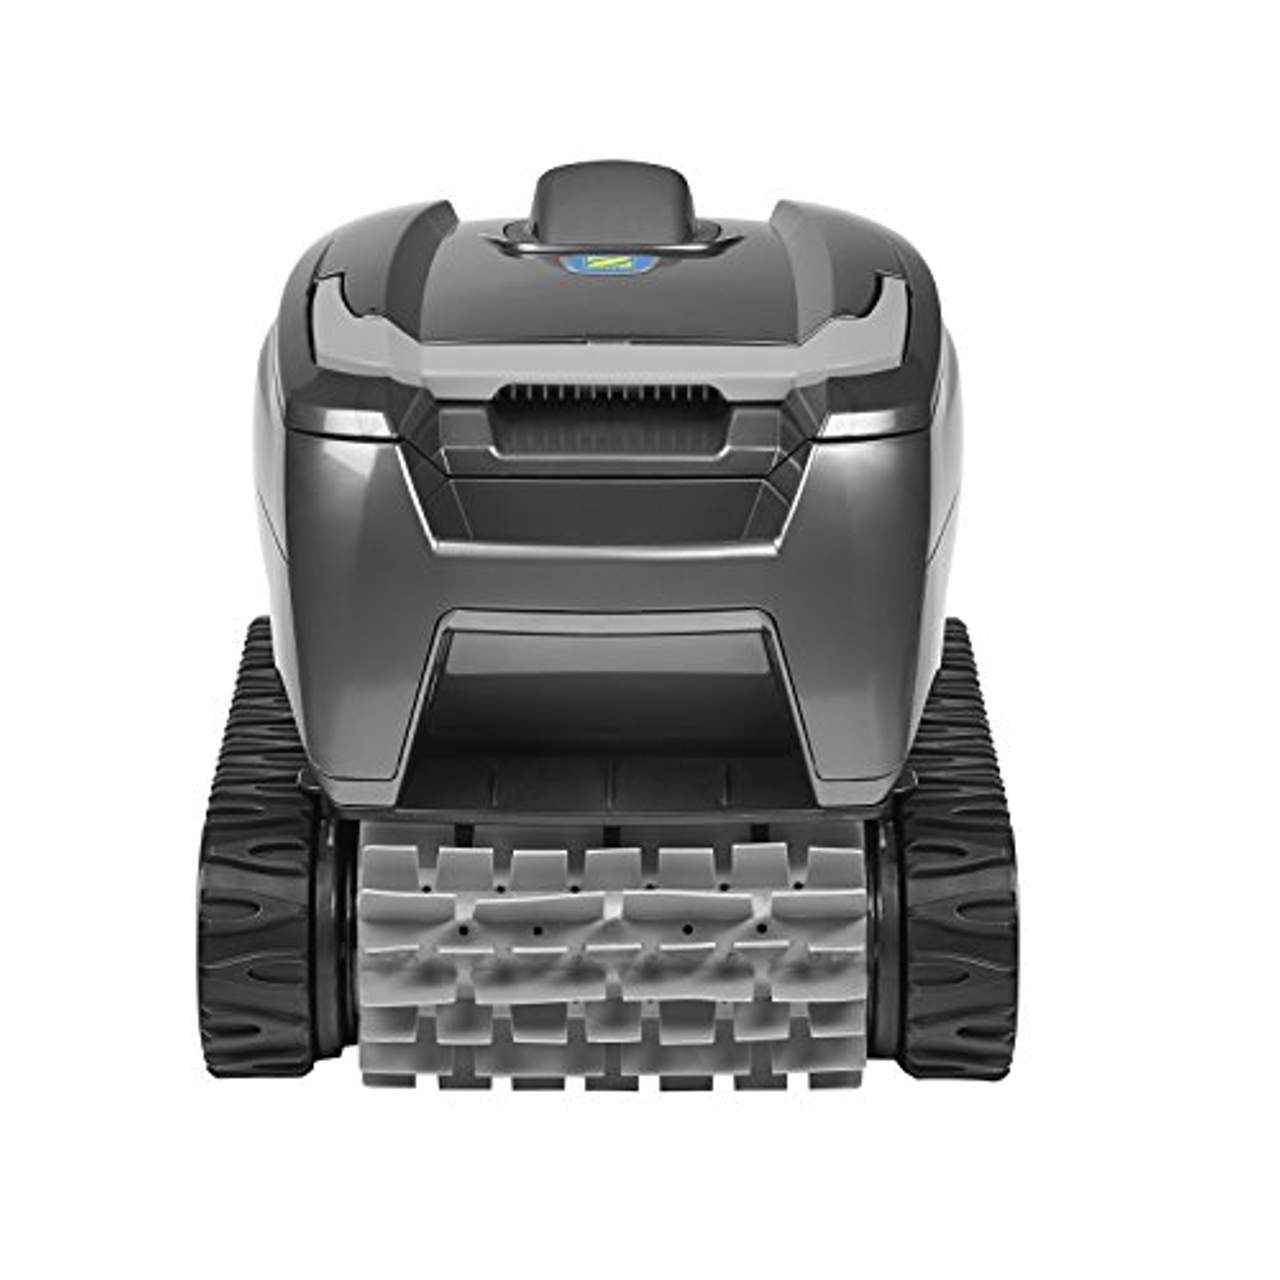 Zodiac Elektrischer Poolroboter TornaX OT 2100